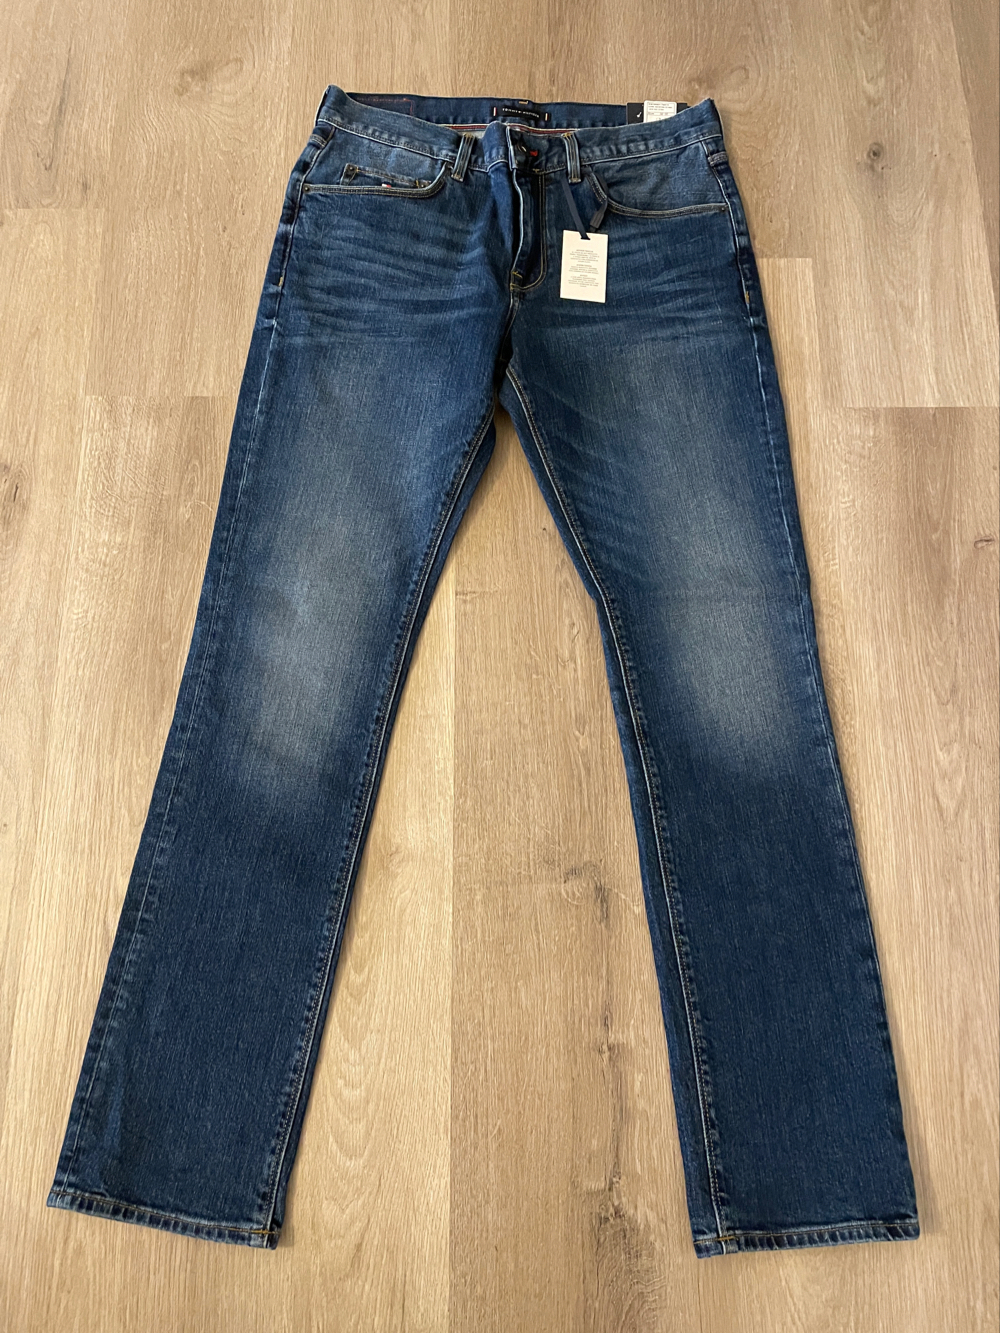 Tommy Hilfiger Jeans Danton Gr.32 32 blau NEU